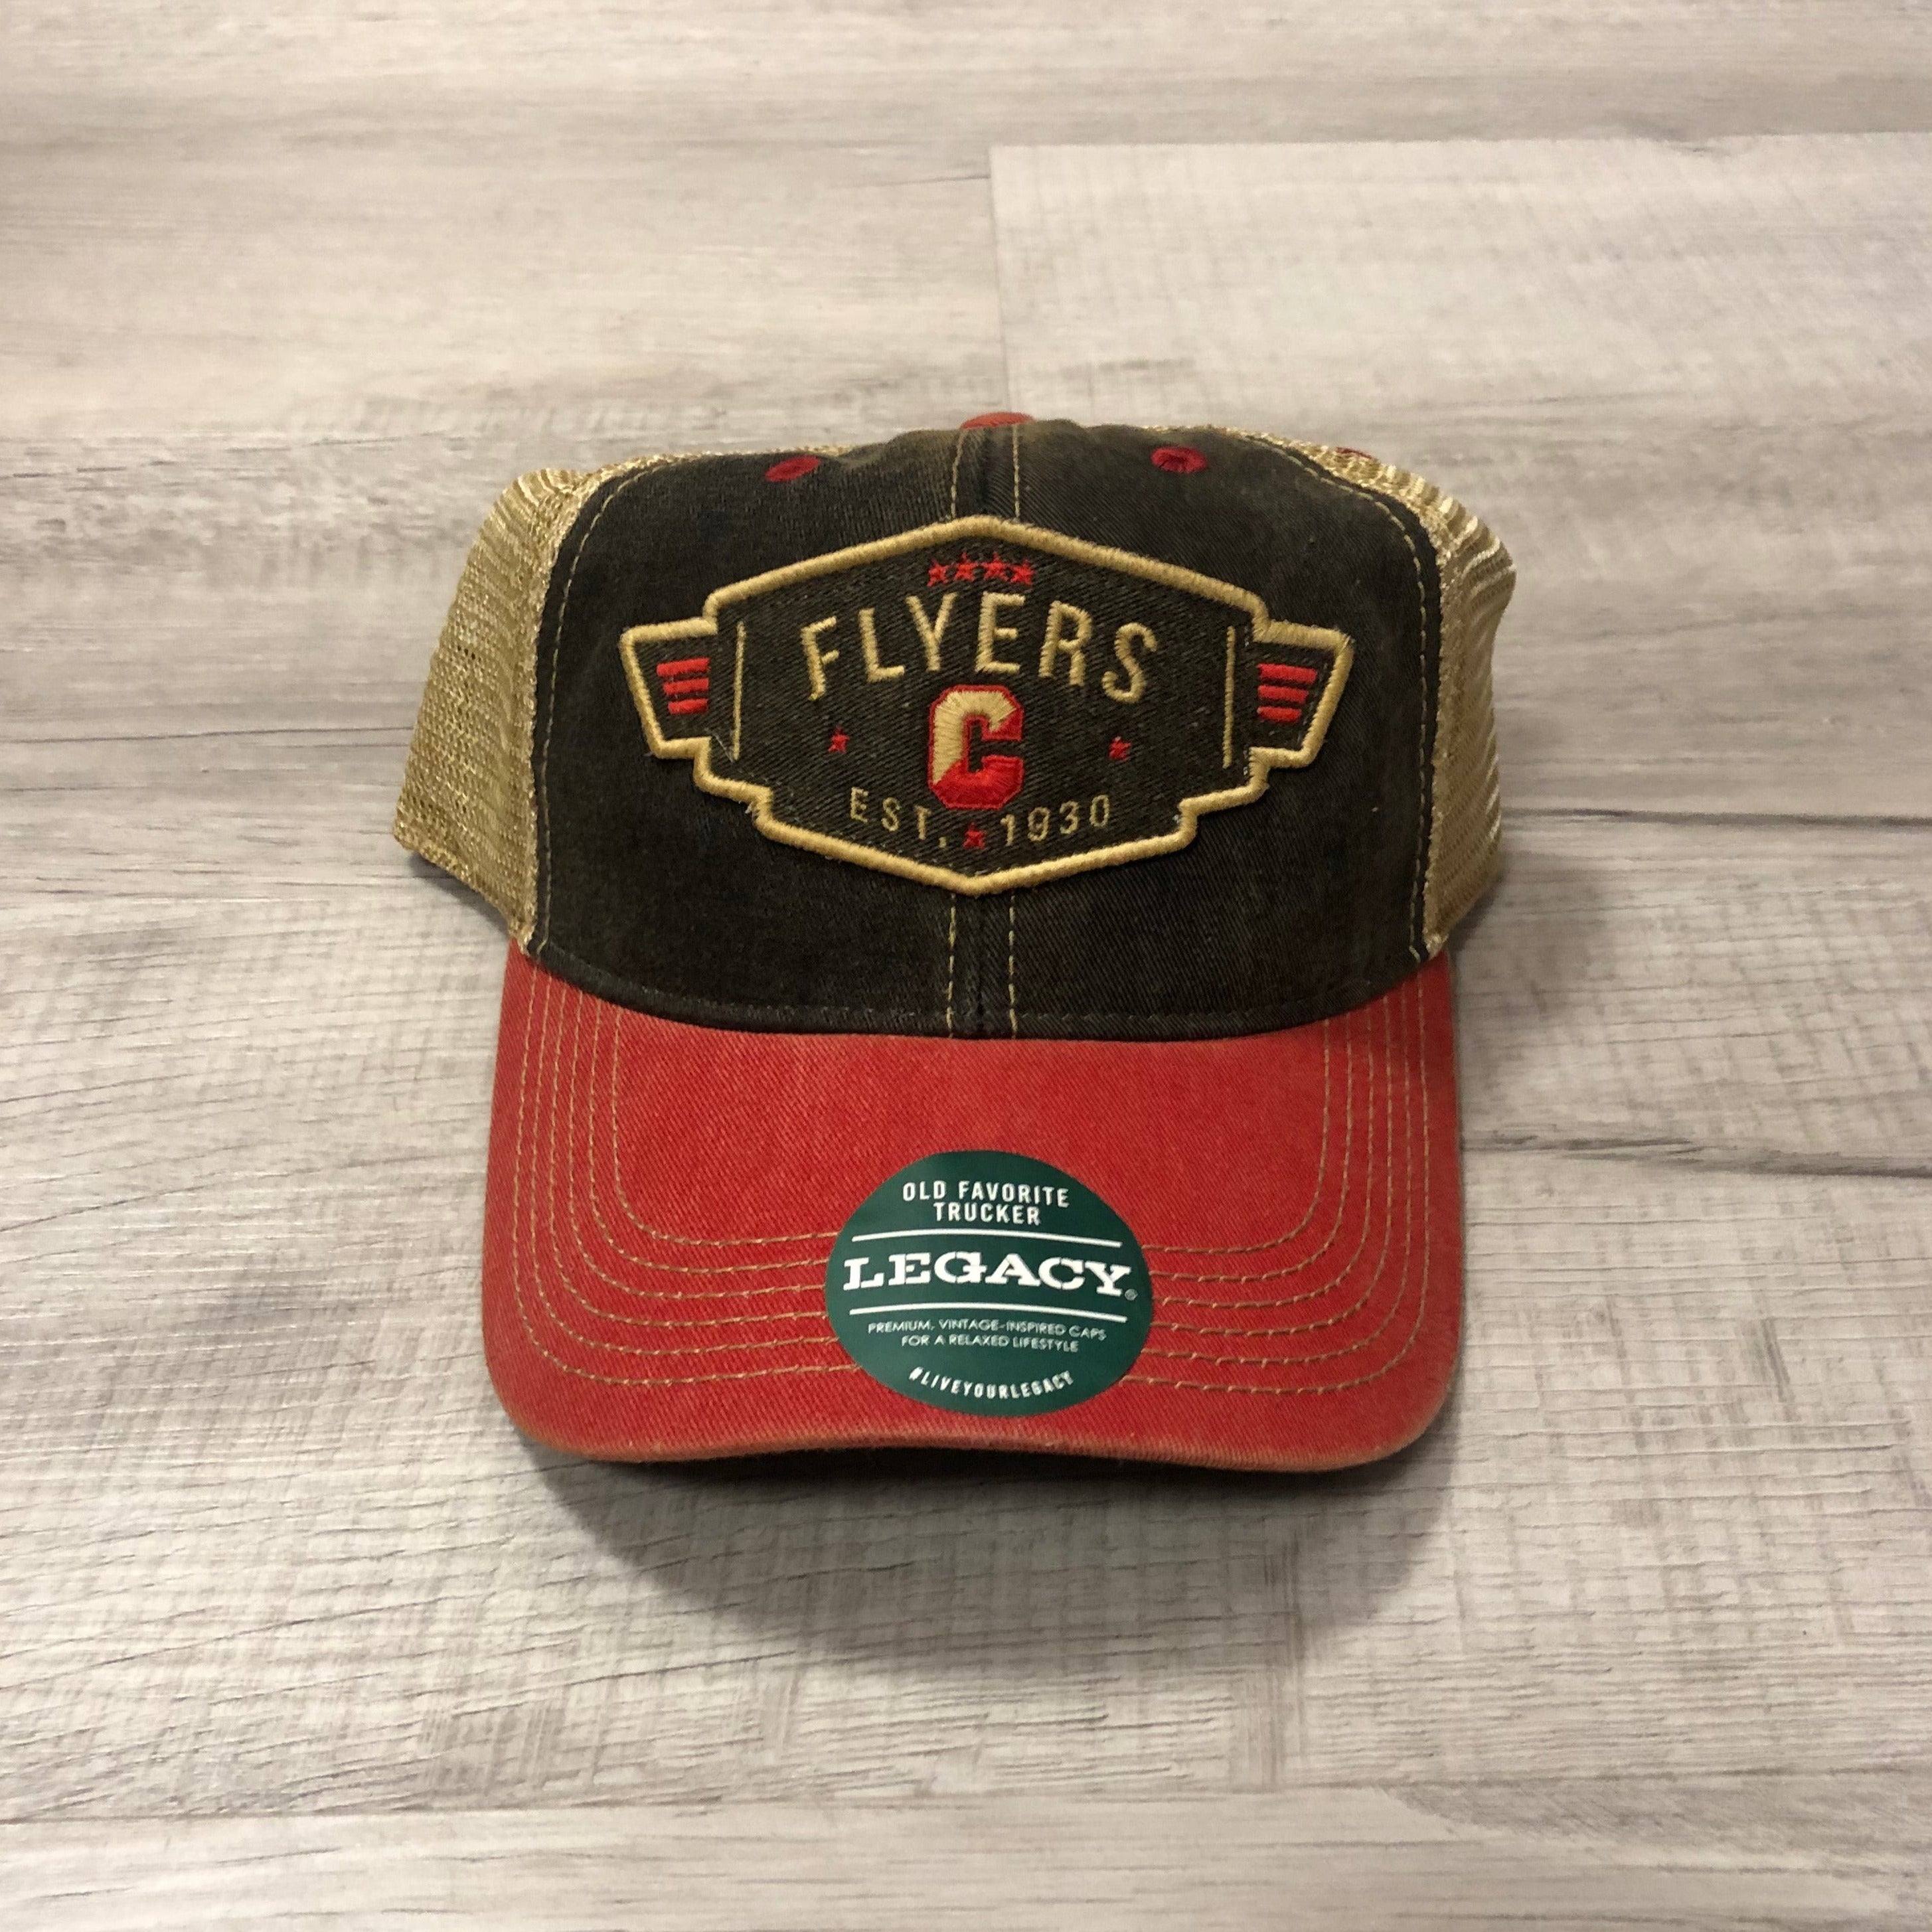 Legacy Trucker Flyers Patch Hat - Flyers (Black, Red, Gold)  - Final Sale